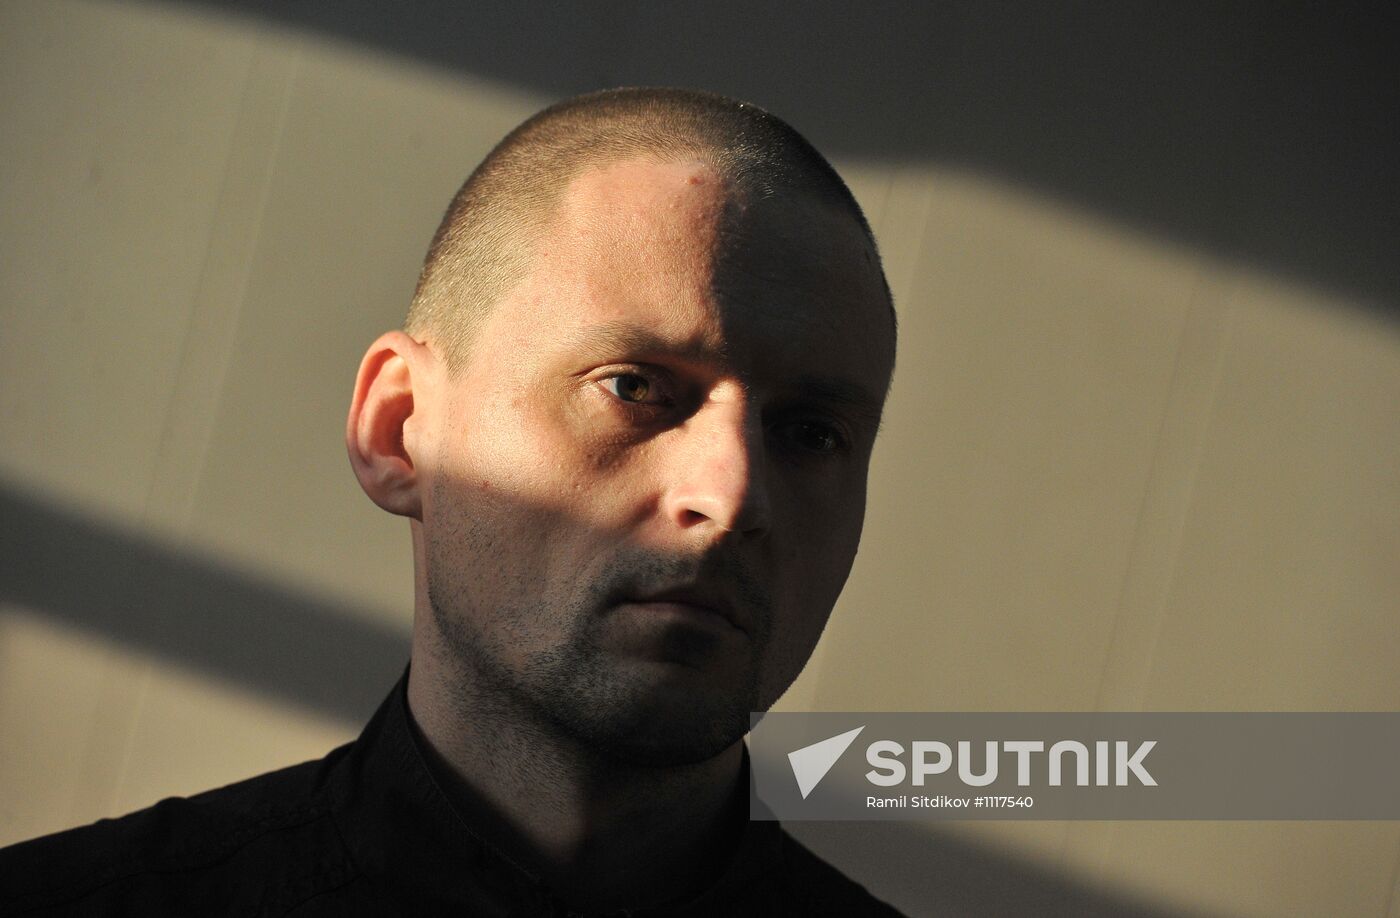 Appeal to Sergei Udaltsov's arrest